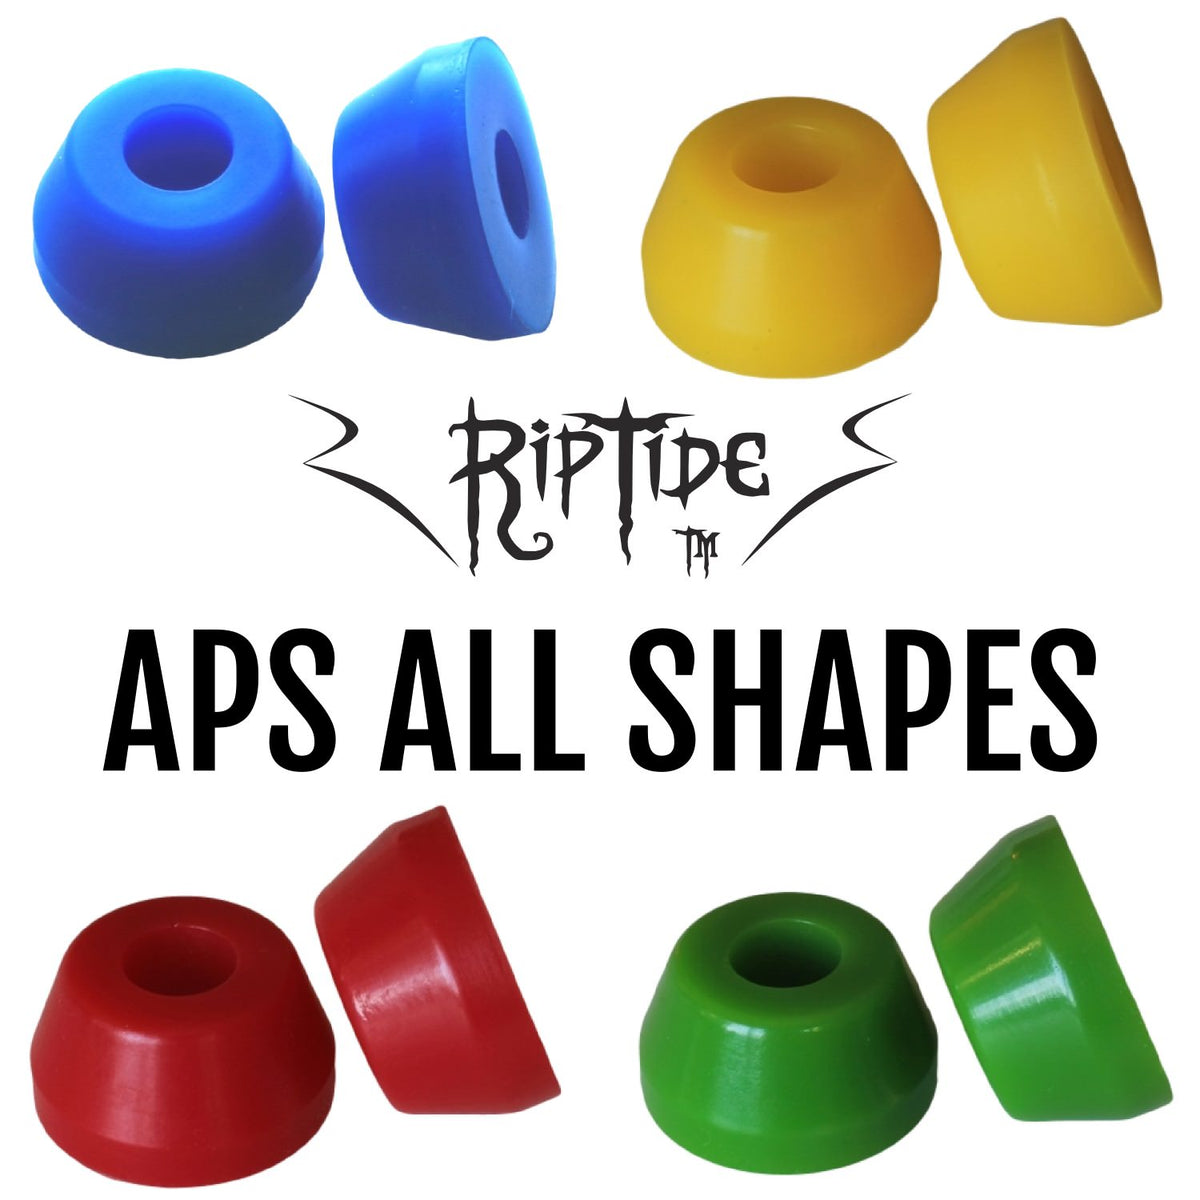 RipTide APS Skateboard Bushings (Cone)